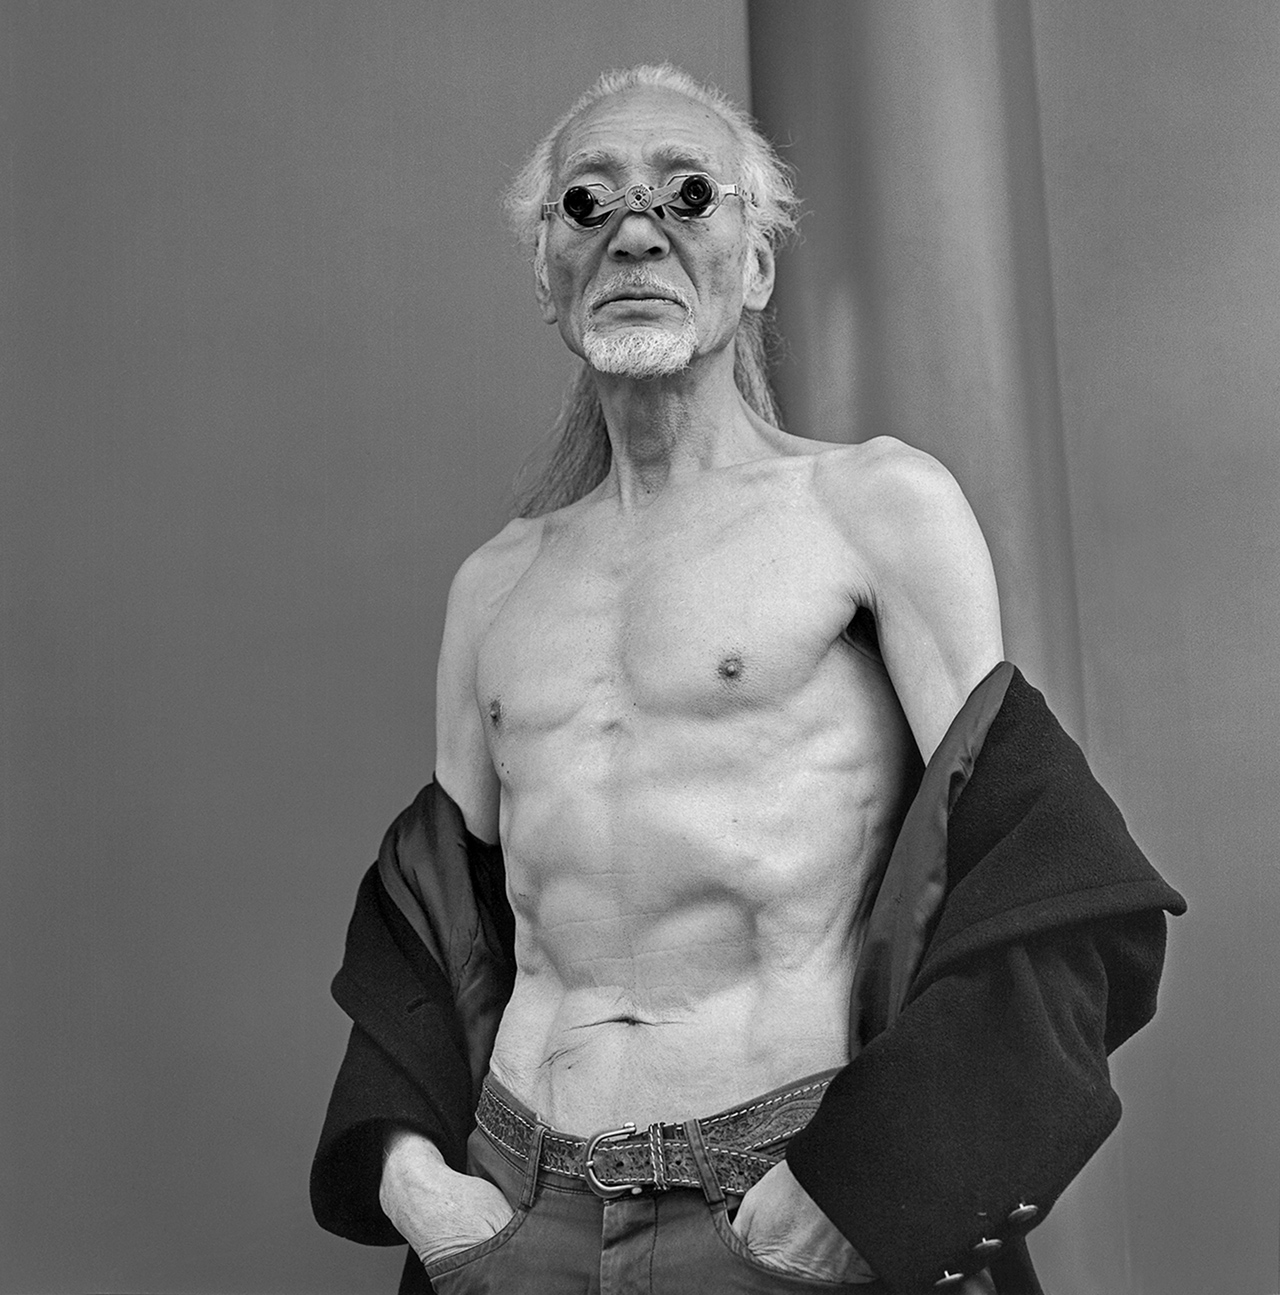 All Images © Hiroh Kikai. A photograph to remember the dancer Yoshimoto Daisuke.